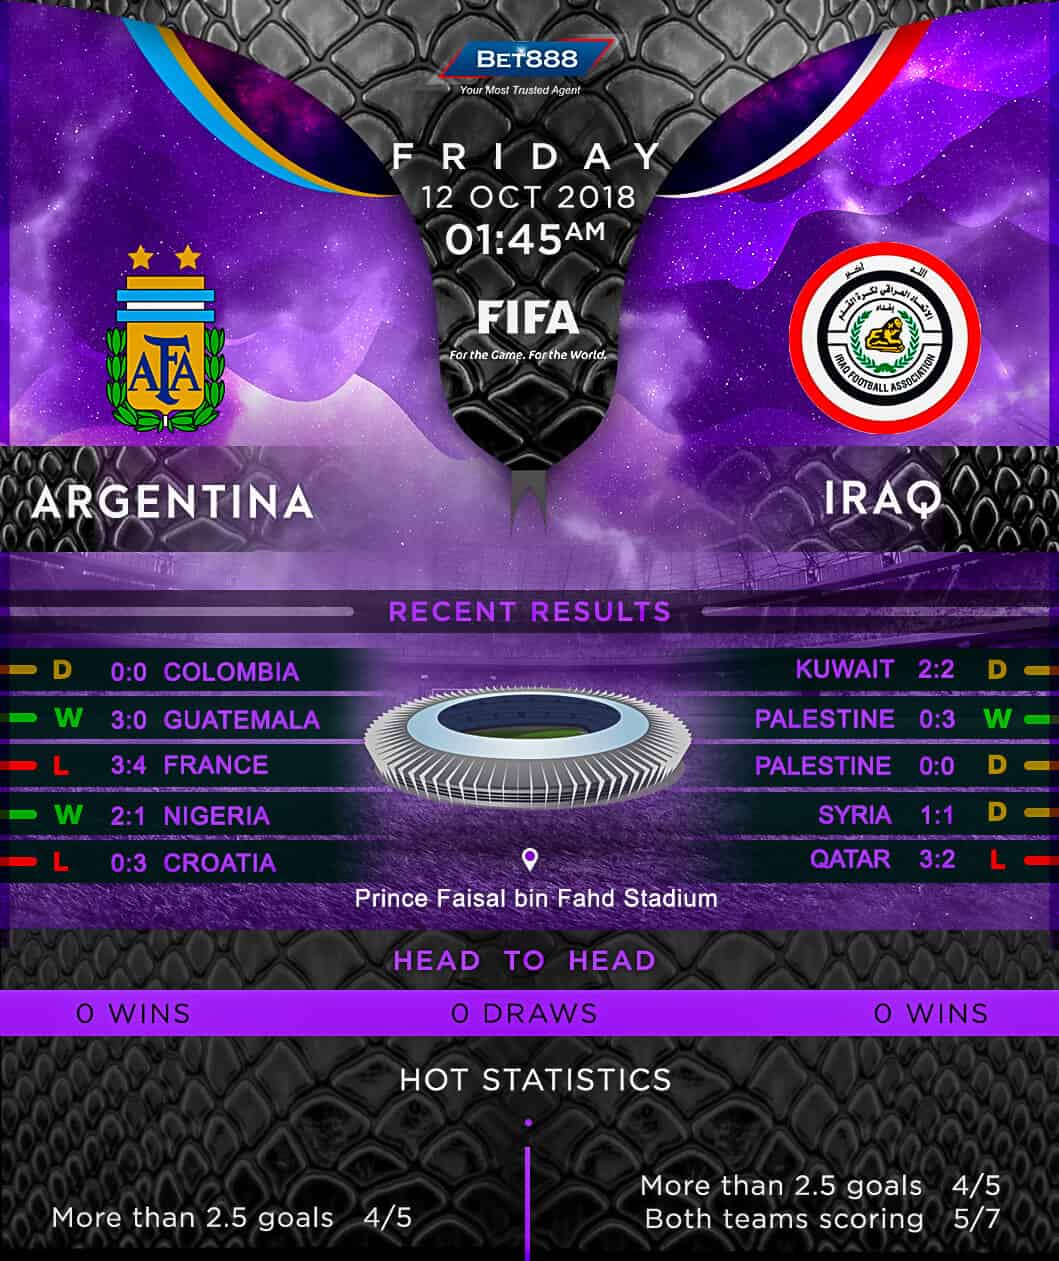 Argentina vs Iraq 12/10/18